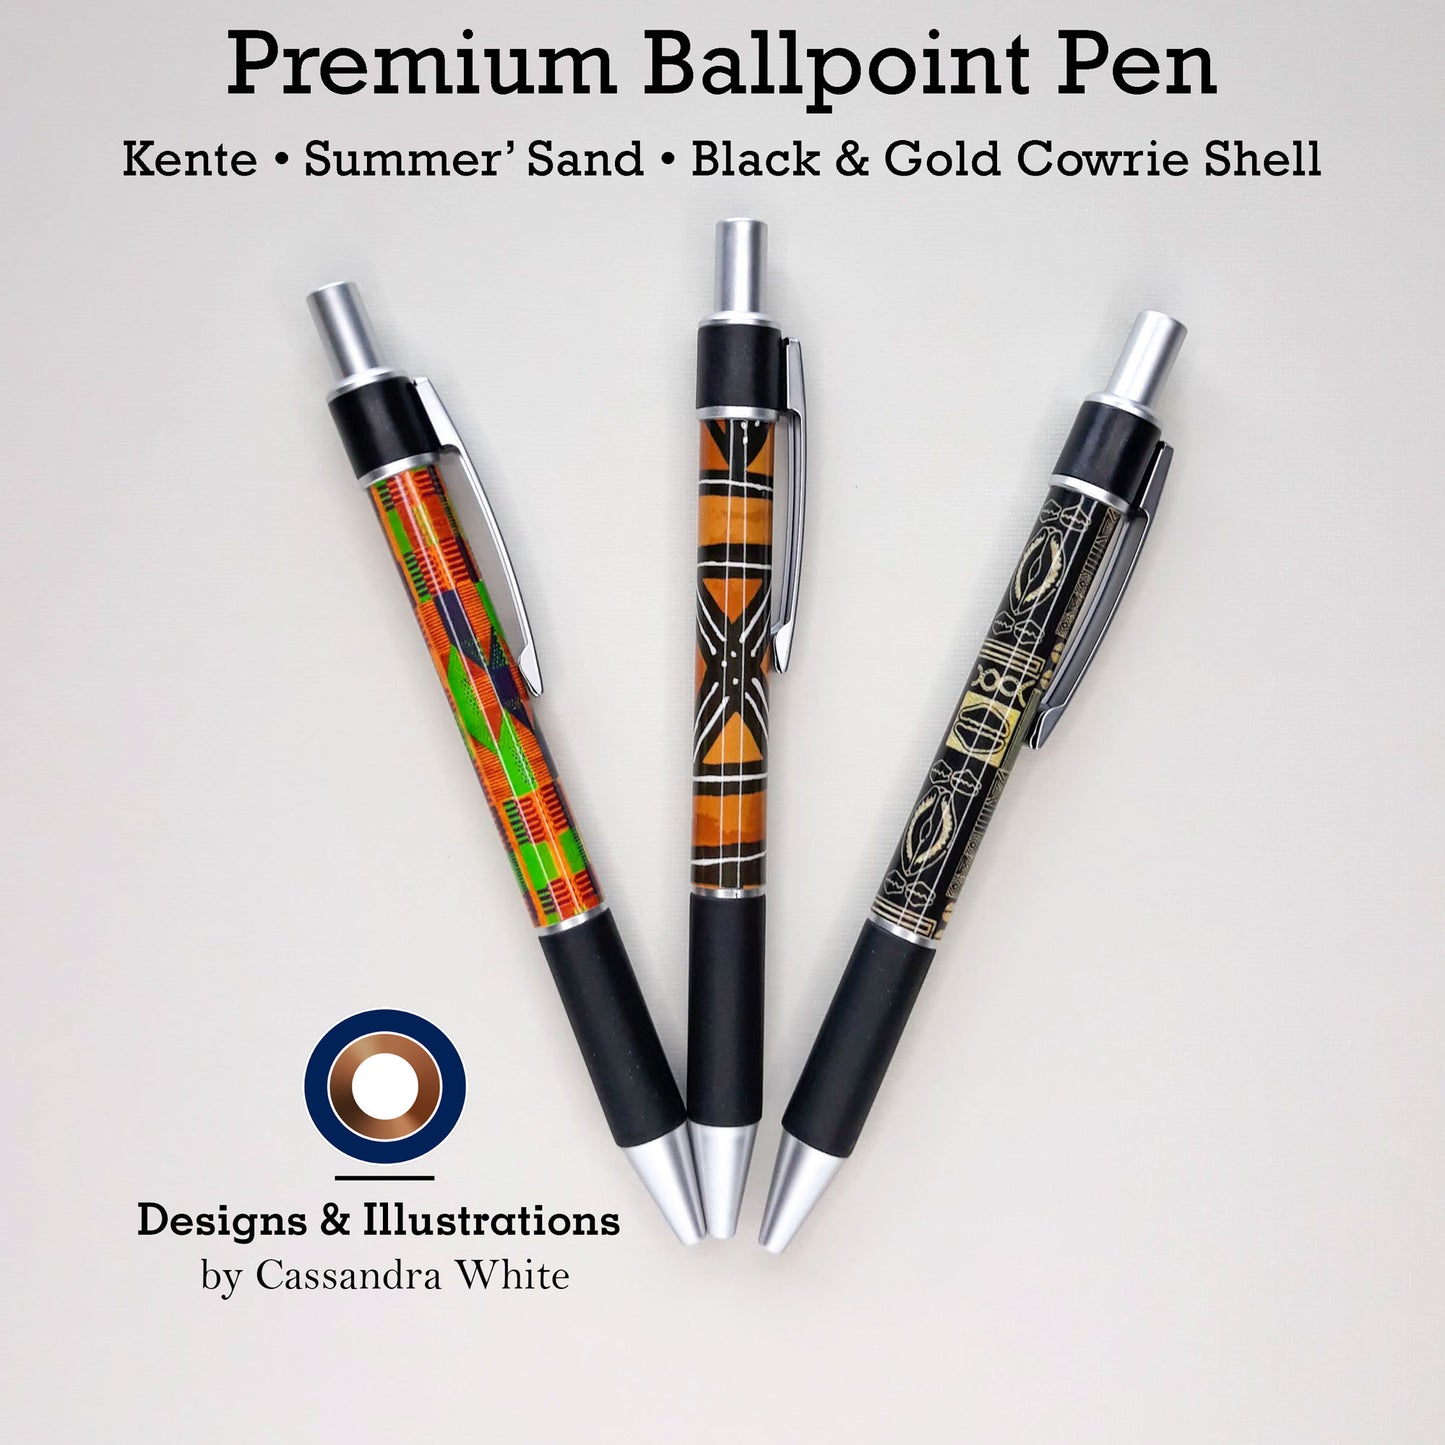 Summer’ Sand Premium Ballpoint Pen